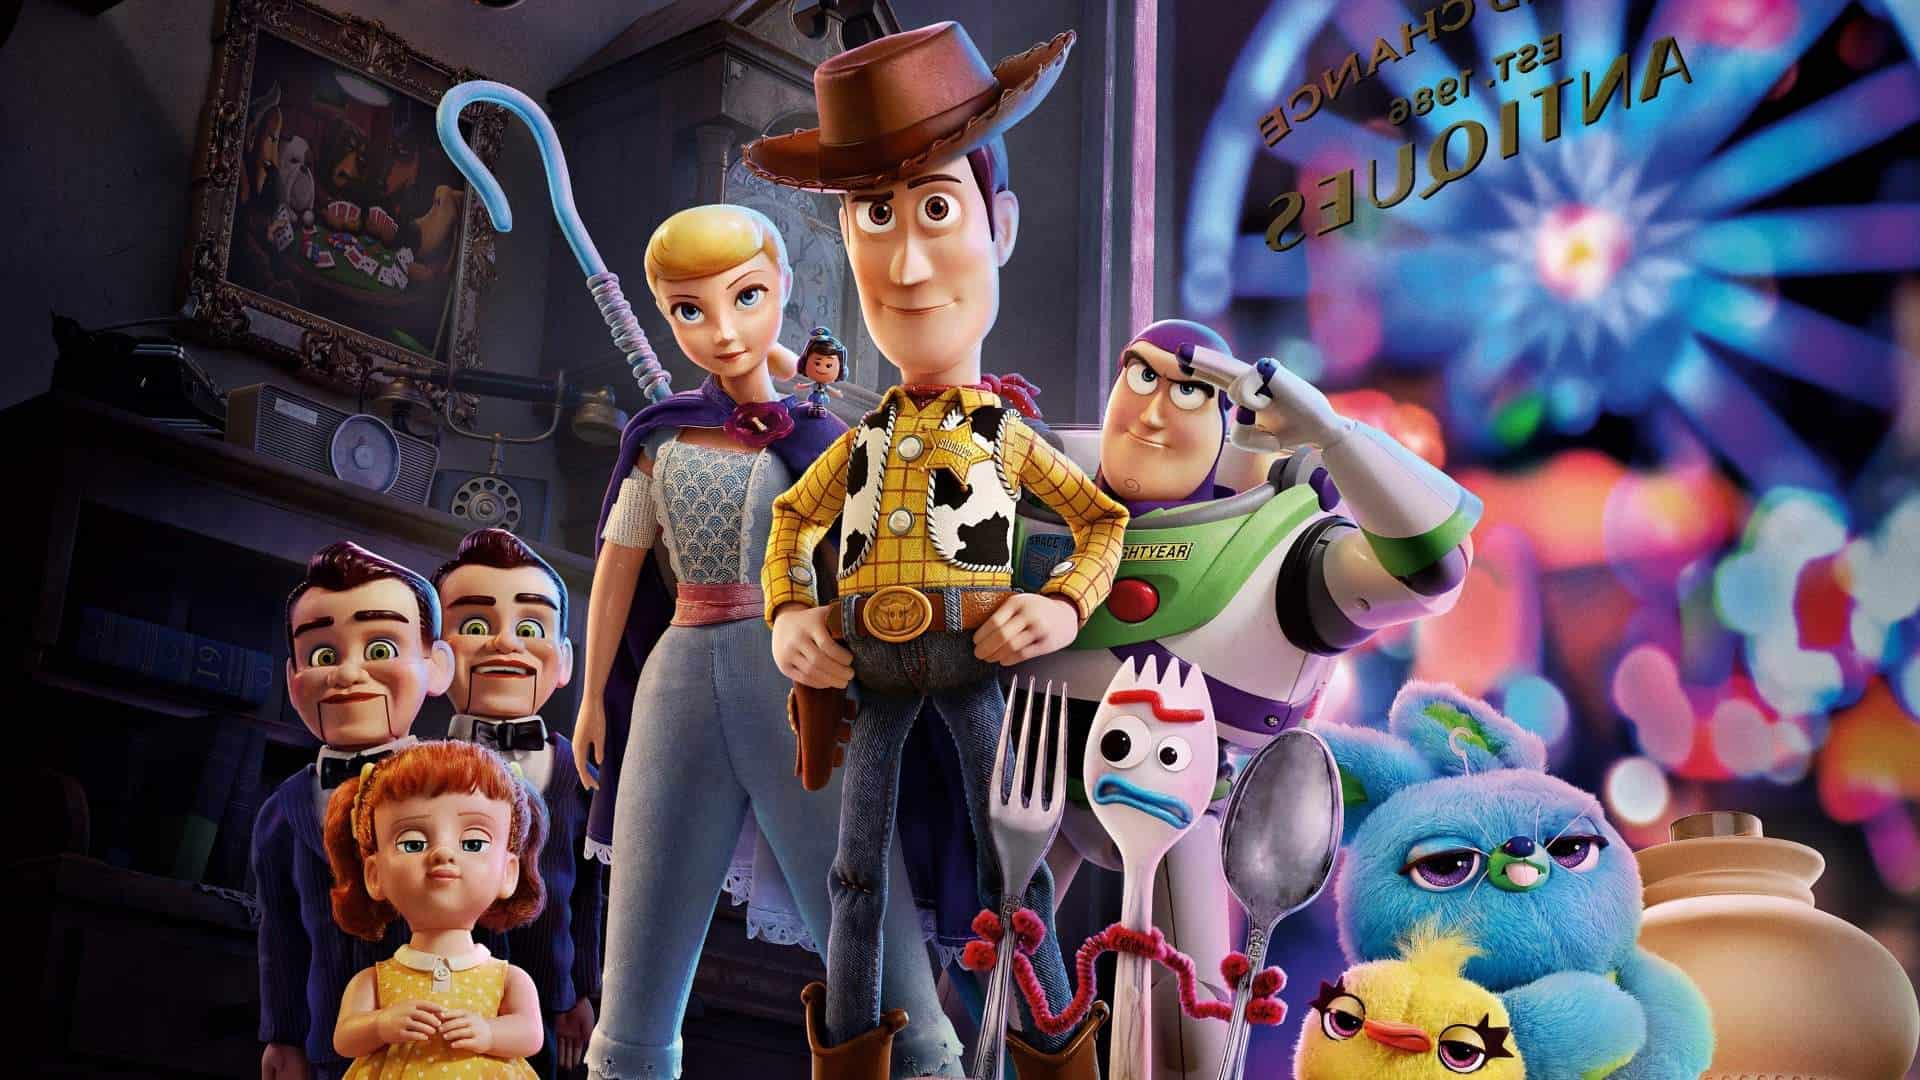 Toy Story 4 (2019) 1080p Bluray Hindi Dubbed